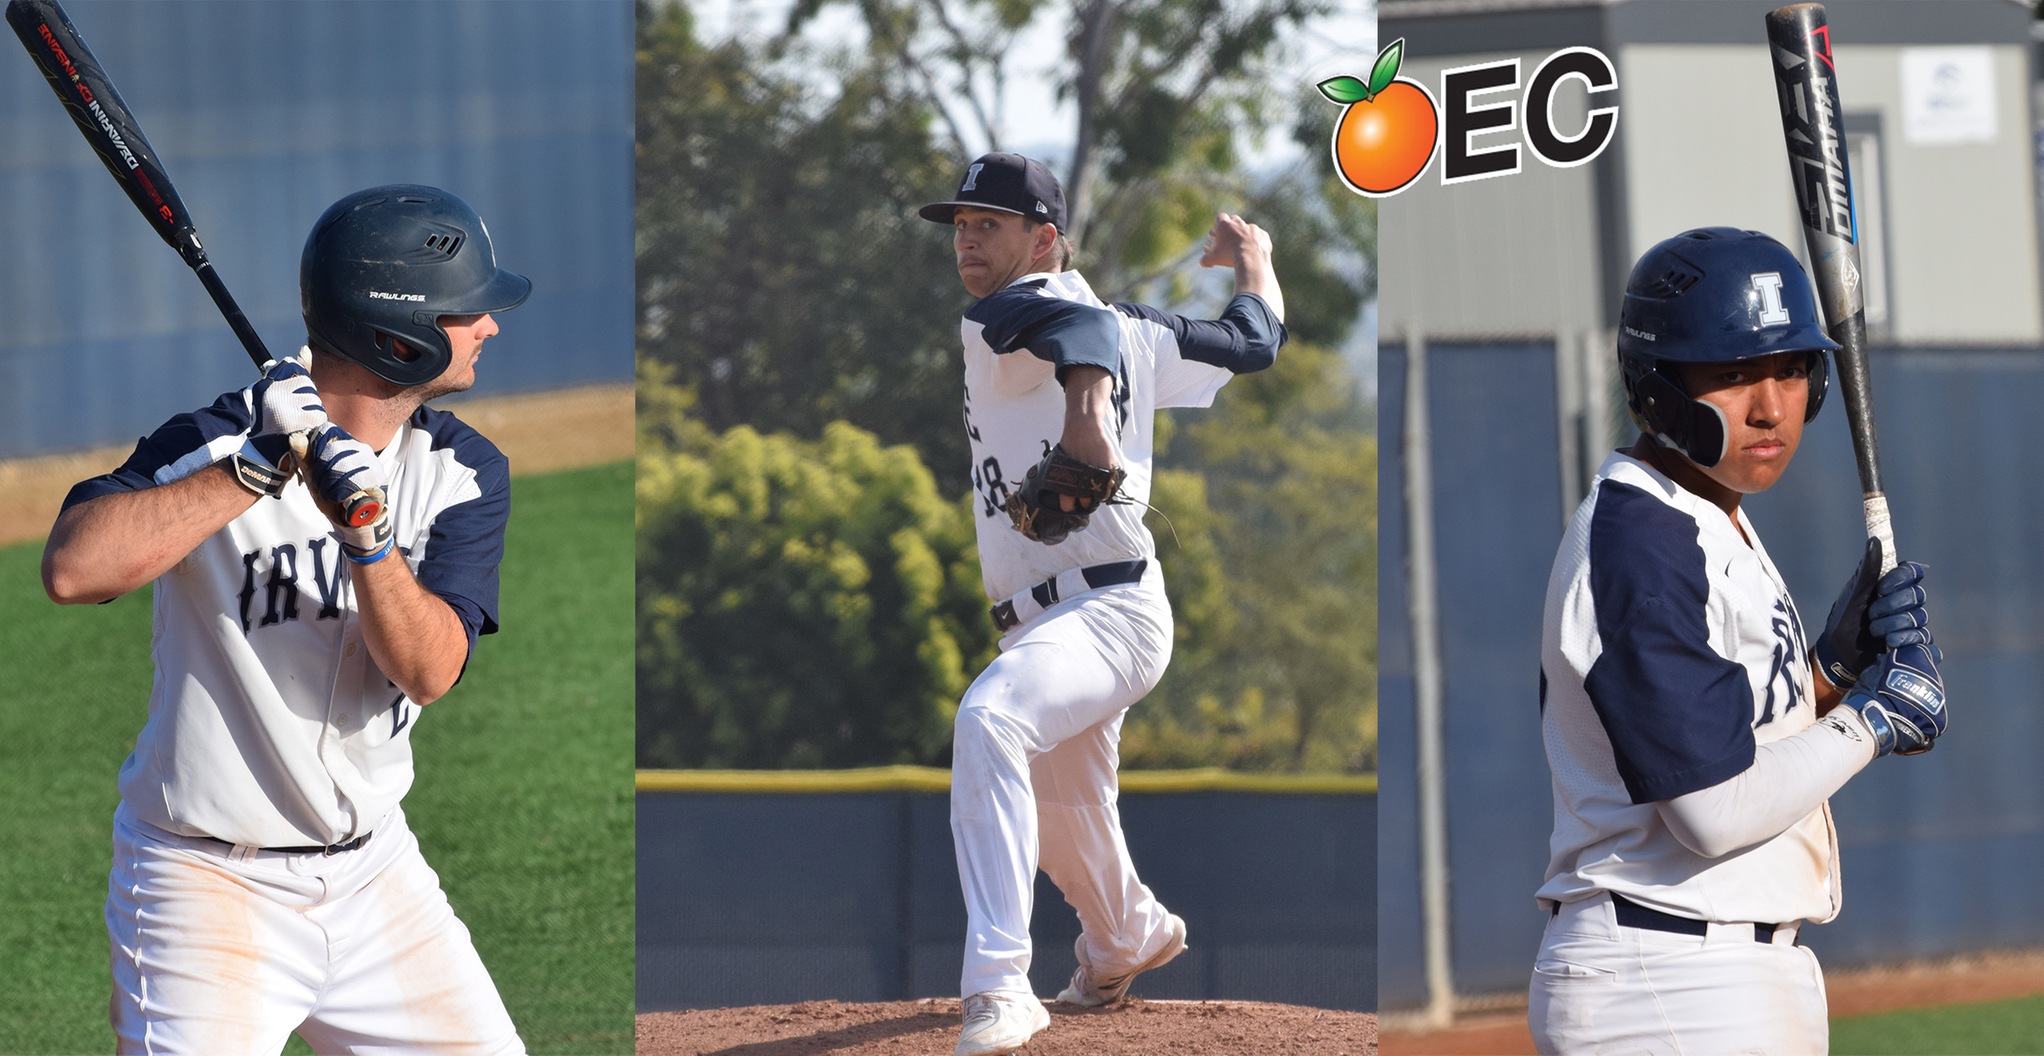 Dobson, Dunham and De Sa named to all-OEC baseball squads